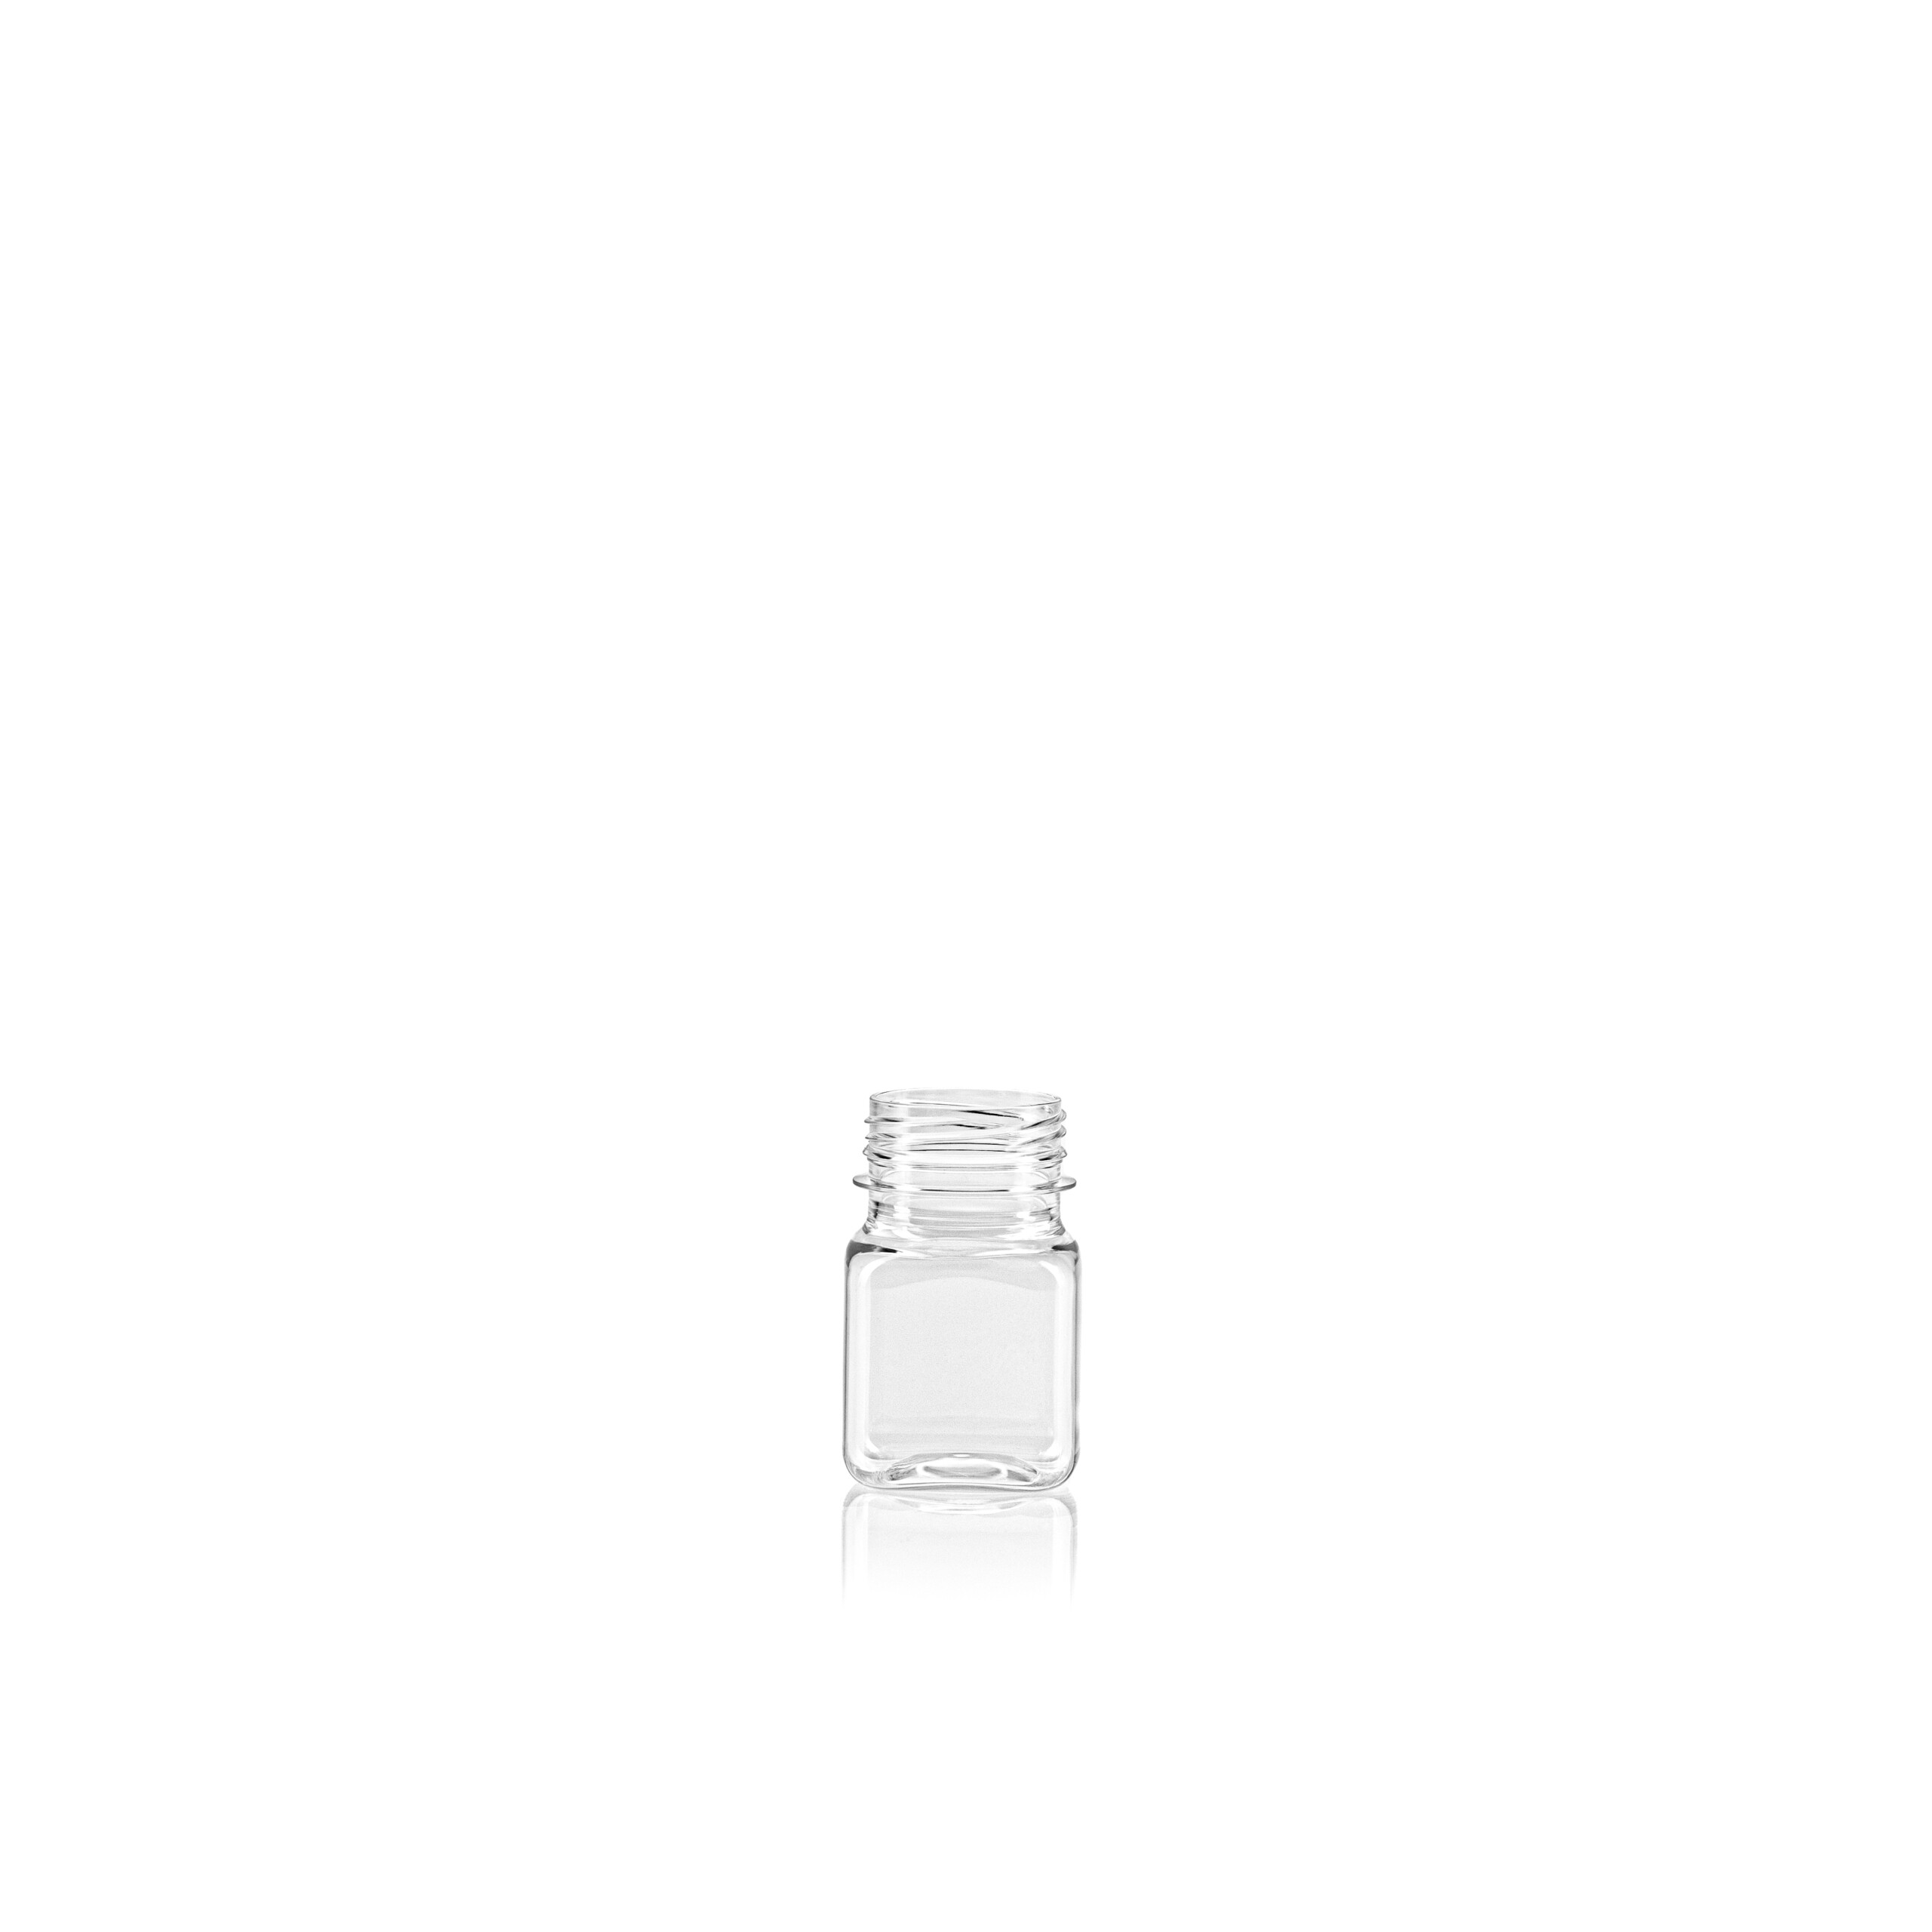 PET juice bottle square 80ml scaled 14